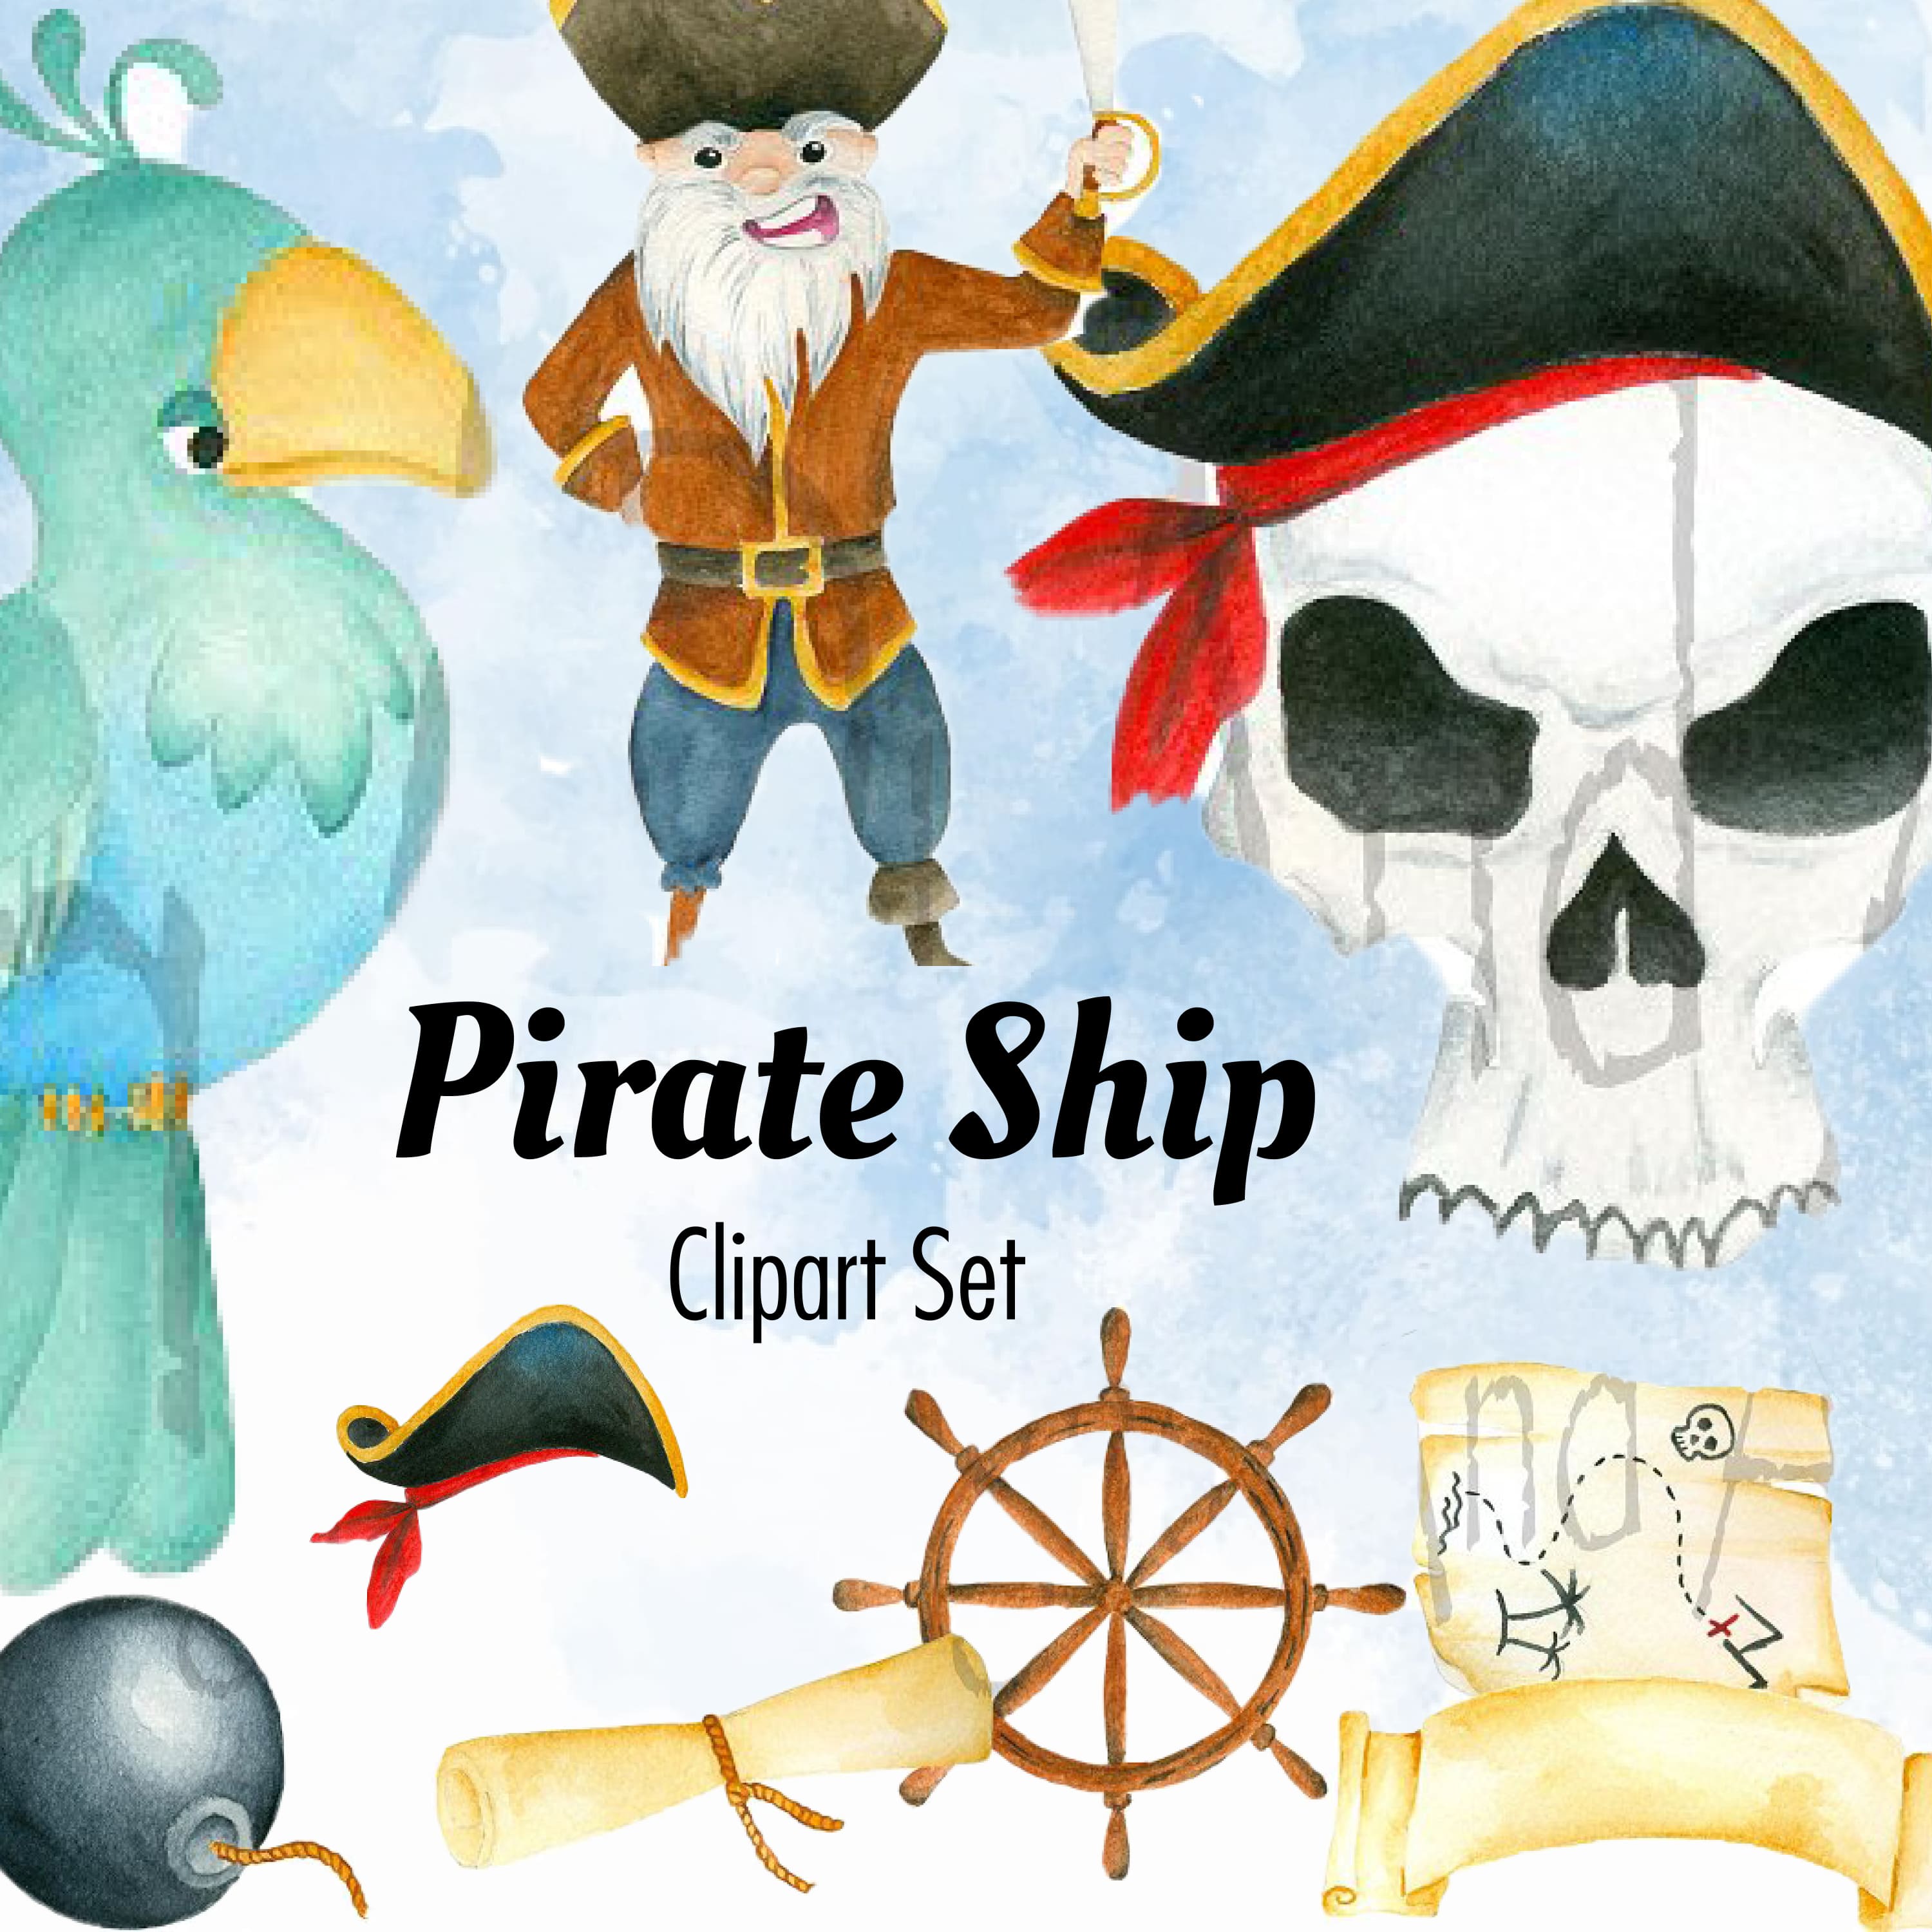 Pirate ship clipart set.